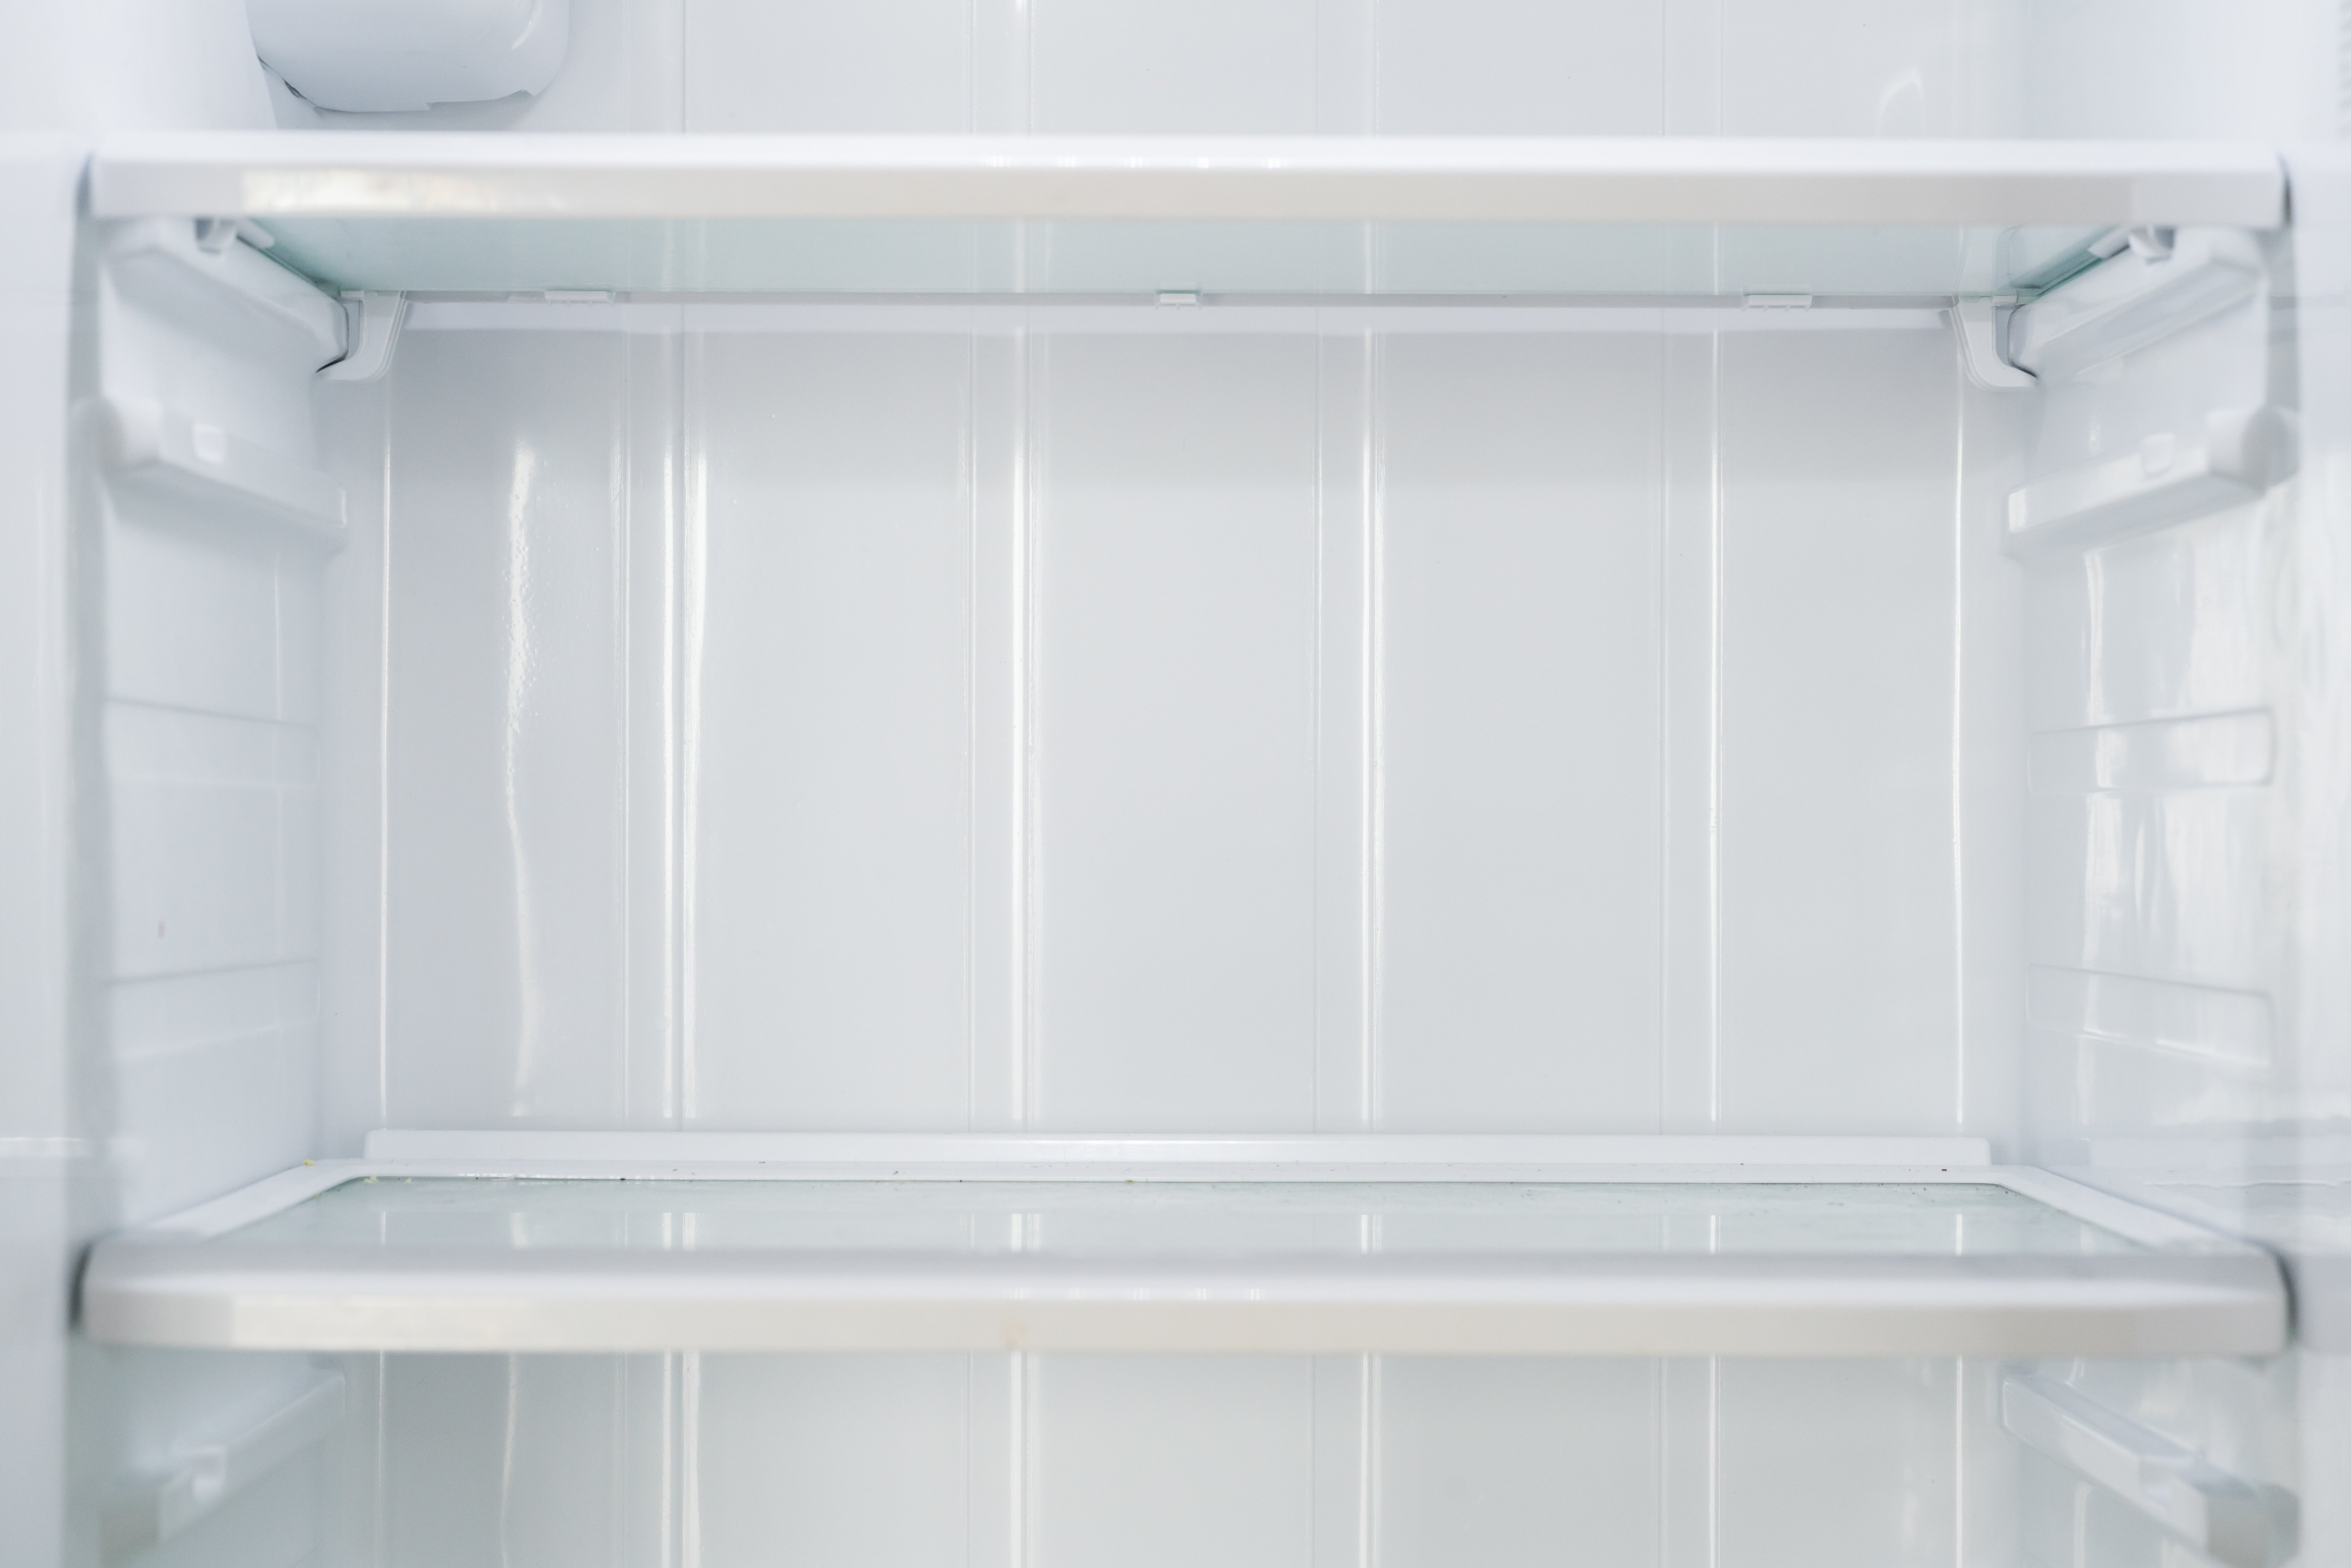 Refrigerator shelves | Shutterstock